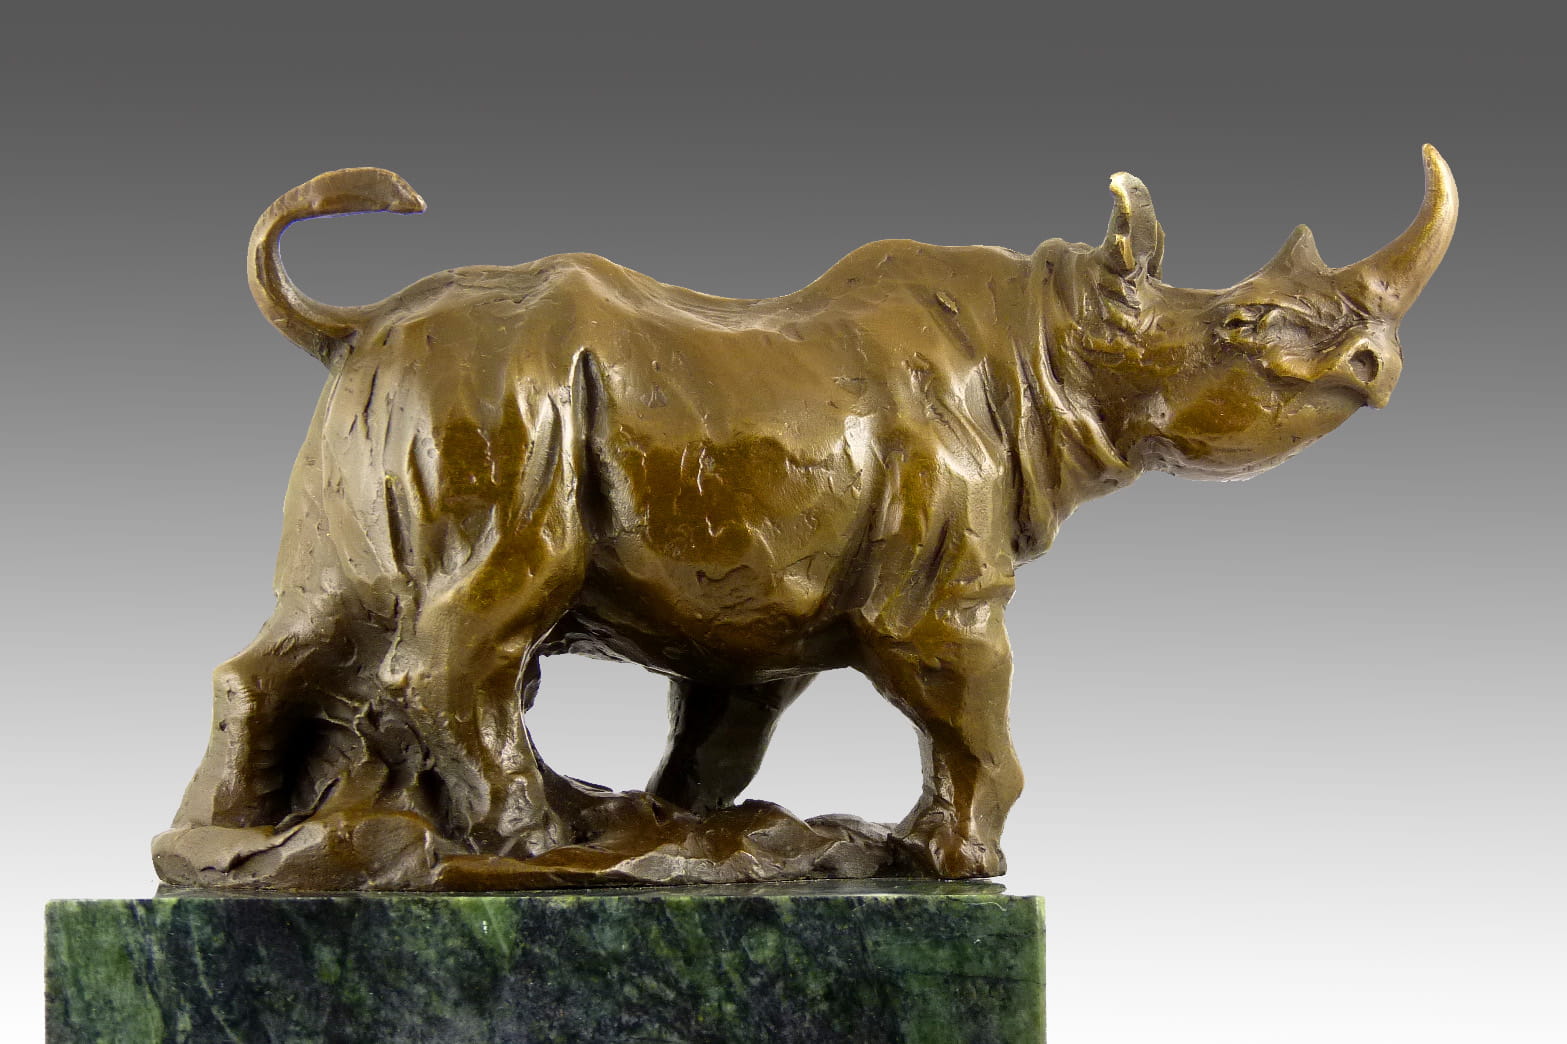 Rhino Tier Bronzefigur Nashorn sitzend Marmorblock Edel Geschenkidee Statuette